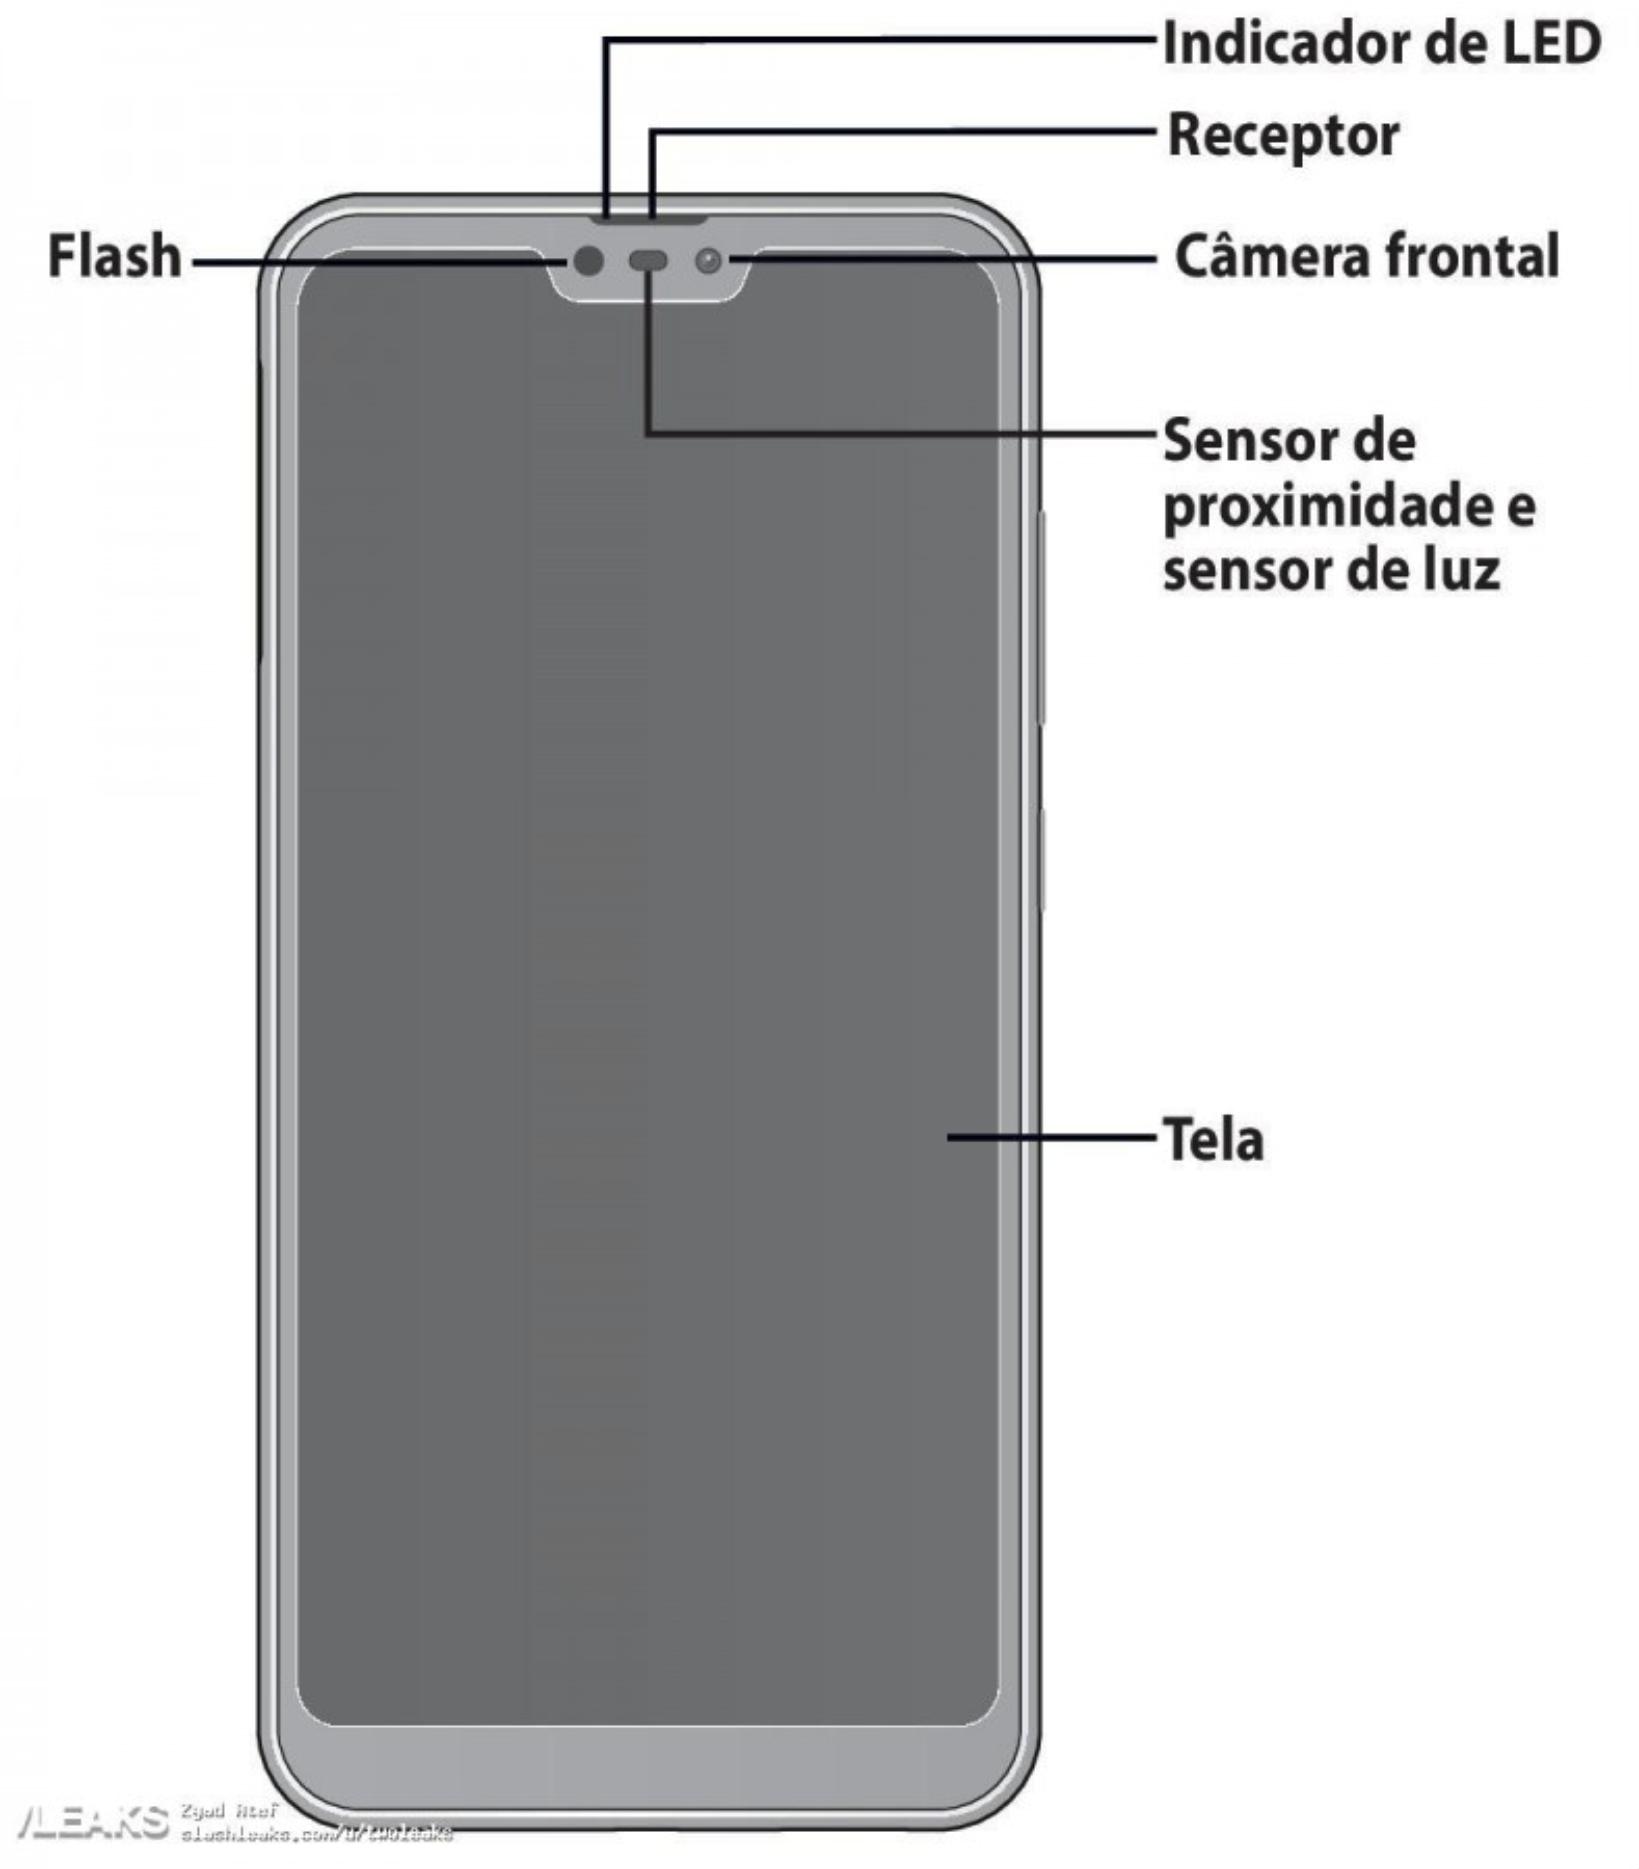 Asus готовит пару интригующих смартфонов: Zenfone Max Plus M2 и Zenfone Max Shot